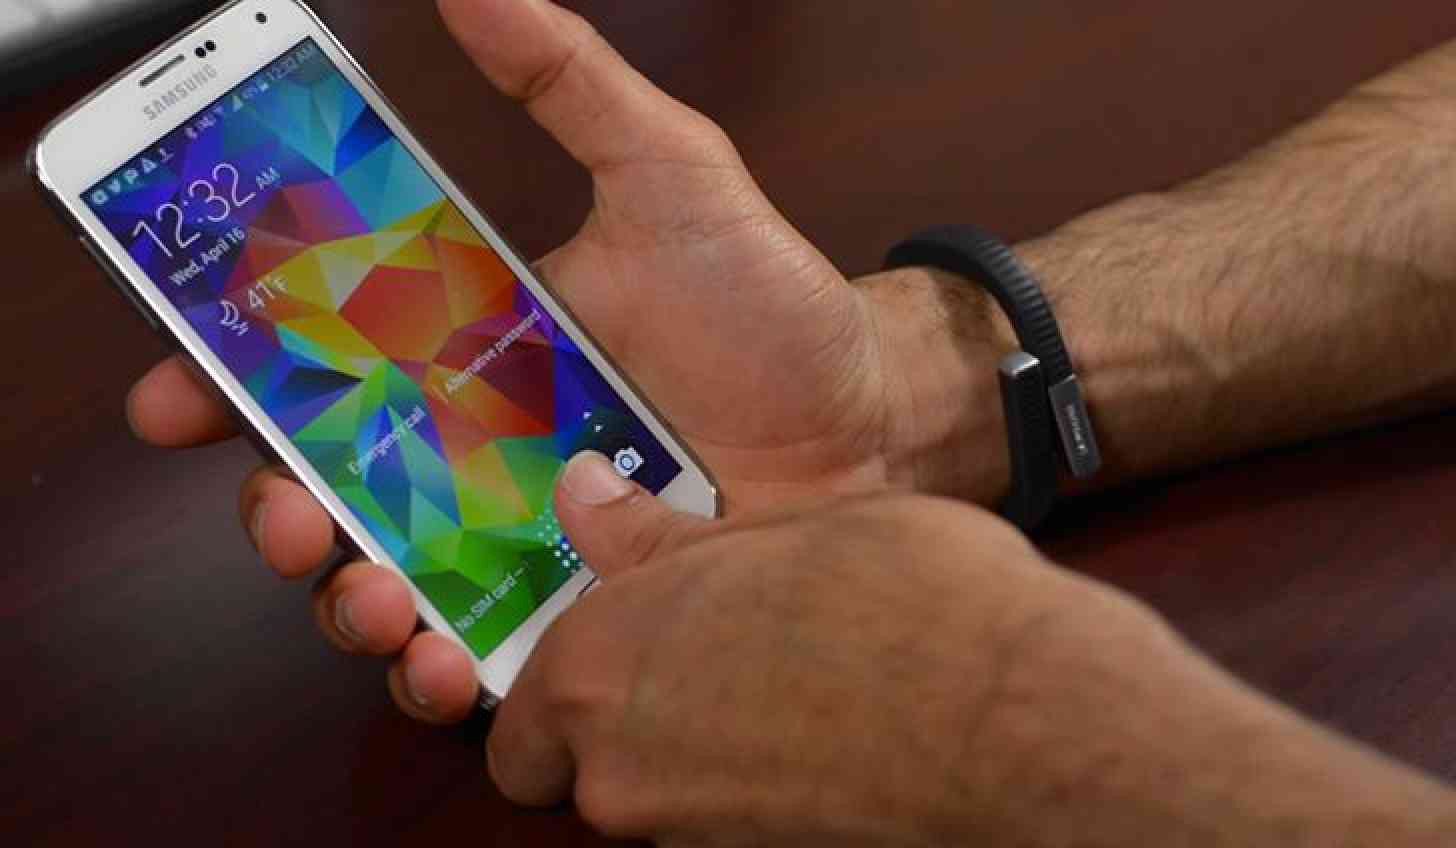 Samsung Galaxy S5 fingerprint scanner